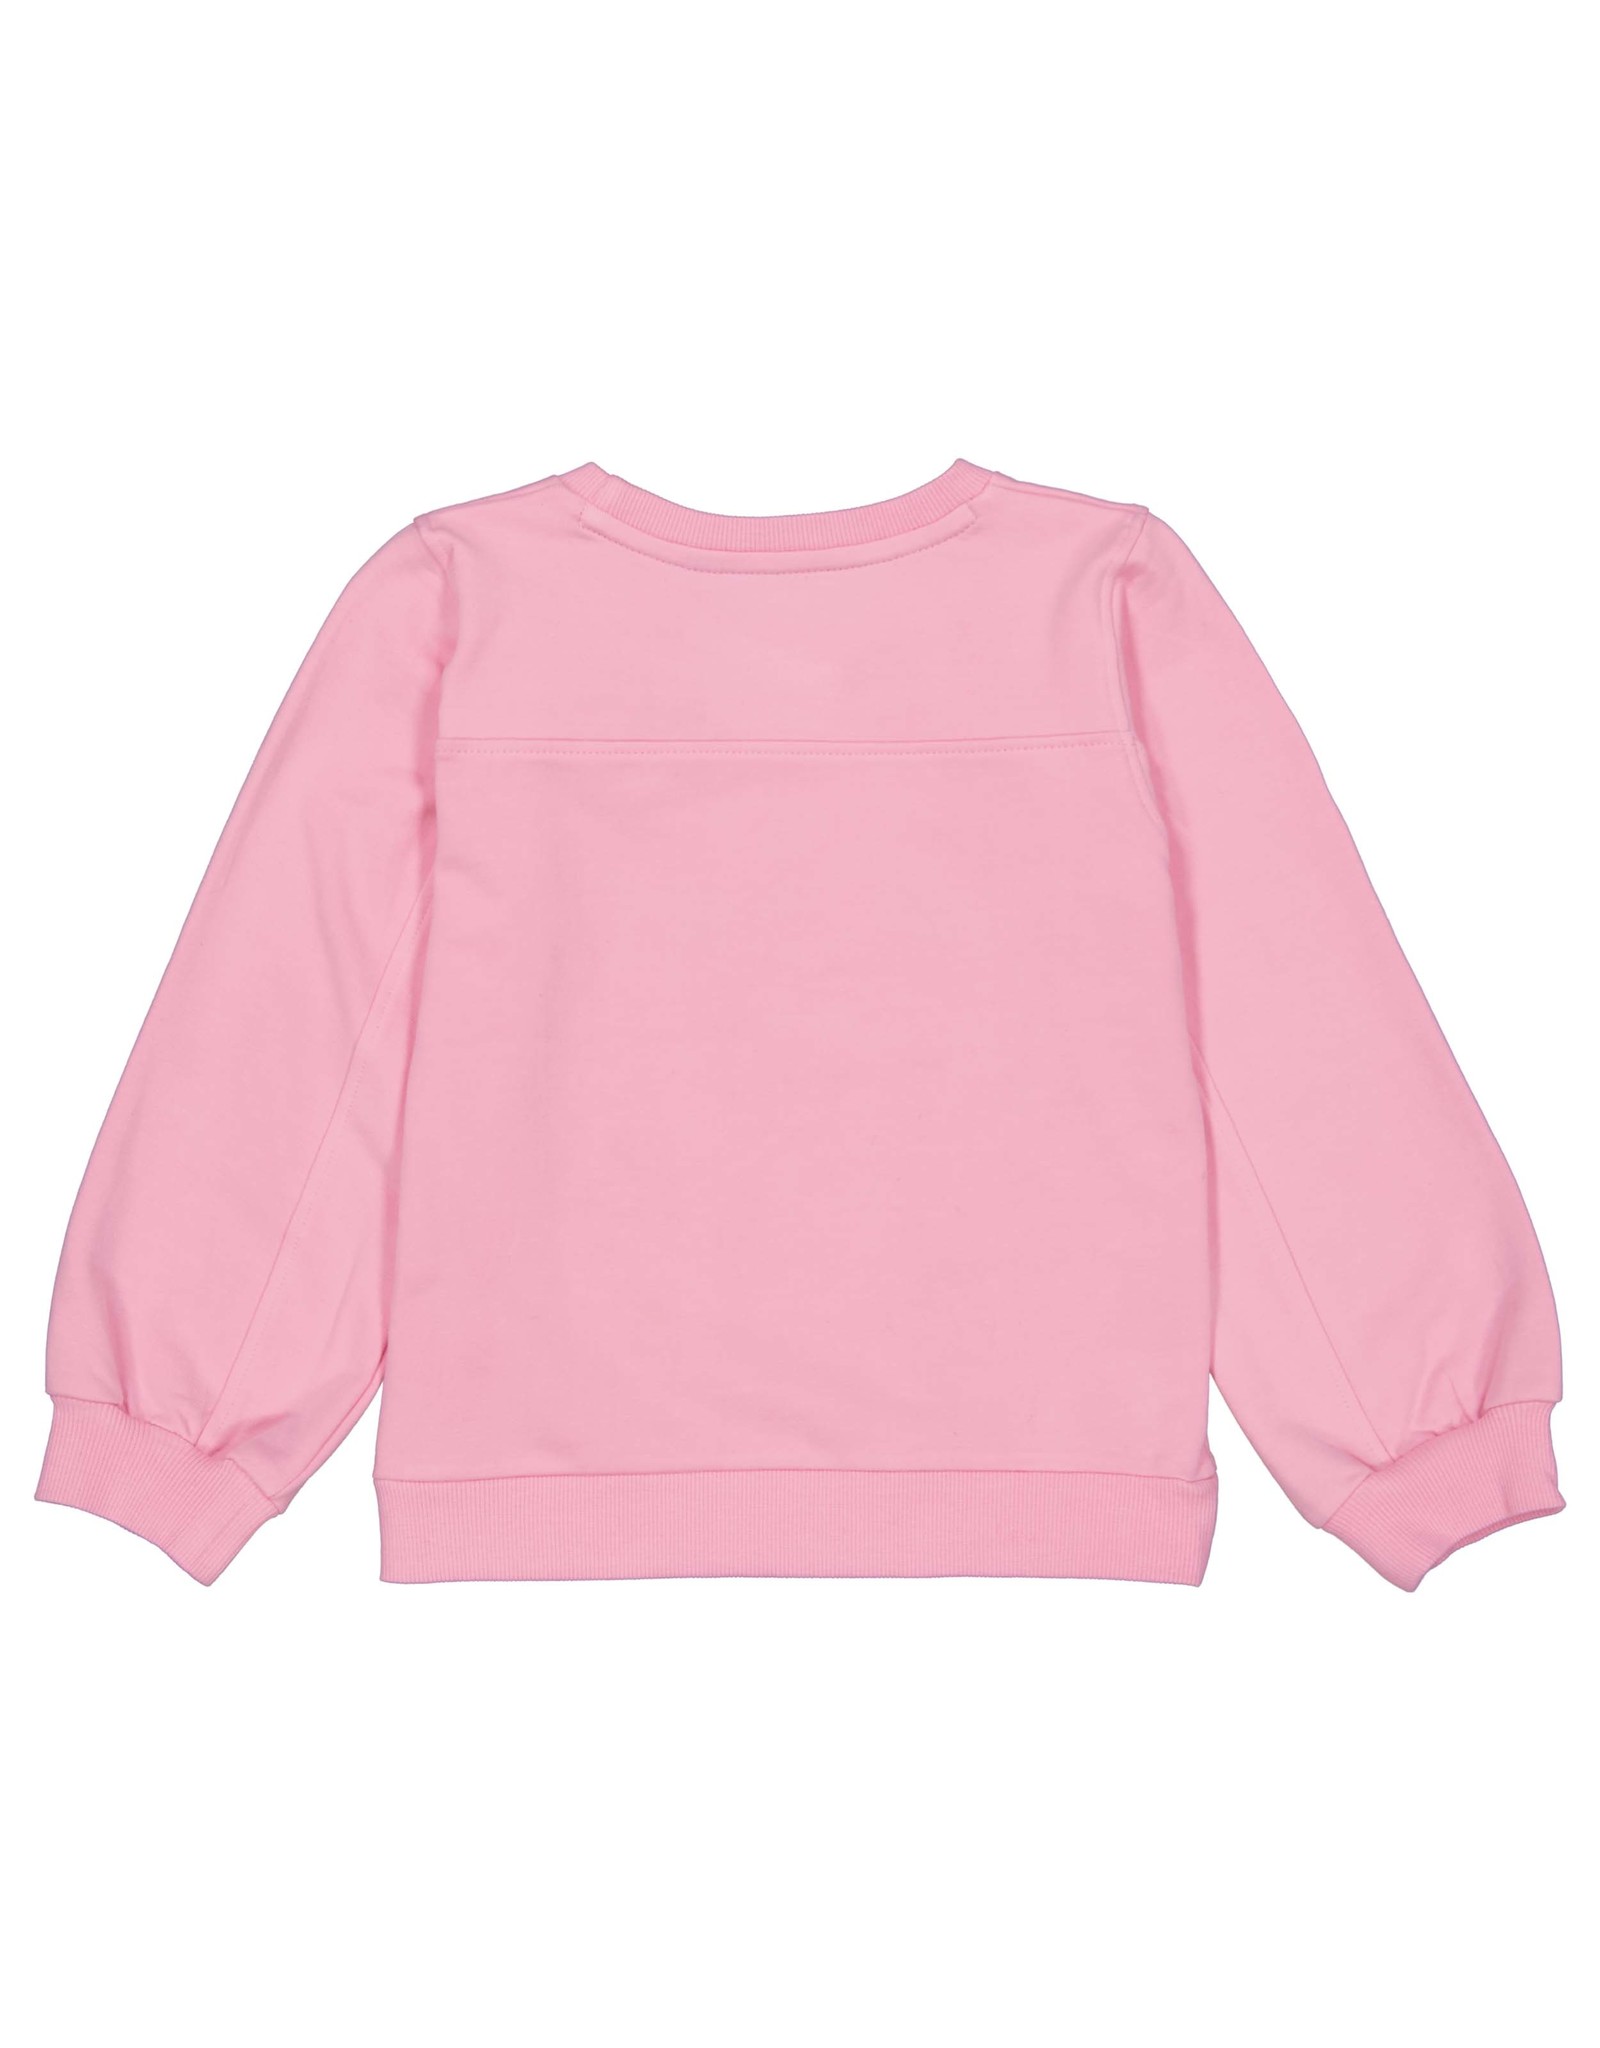 Quapi Quapi sweater Malin pink begonia